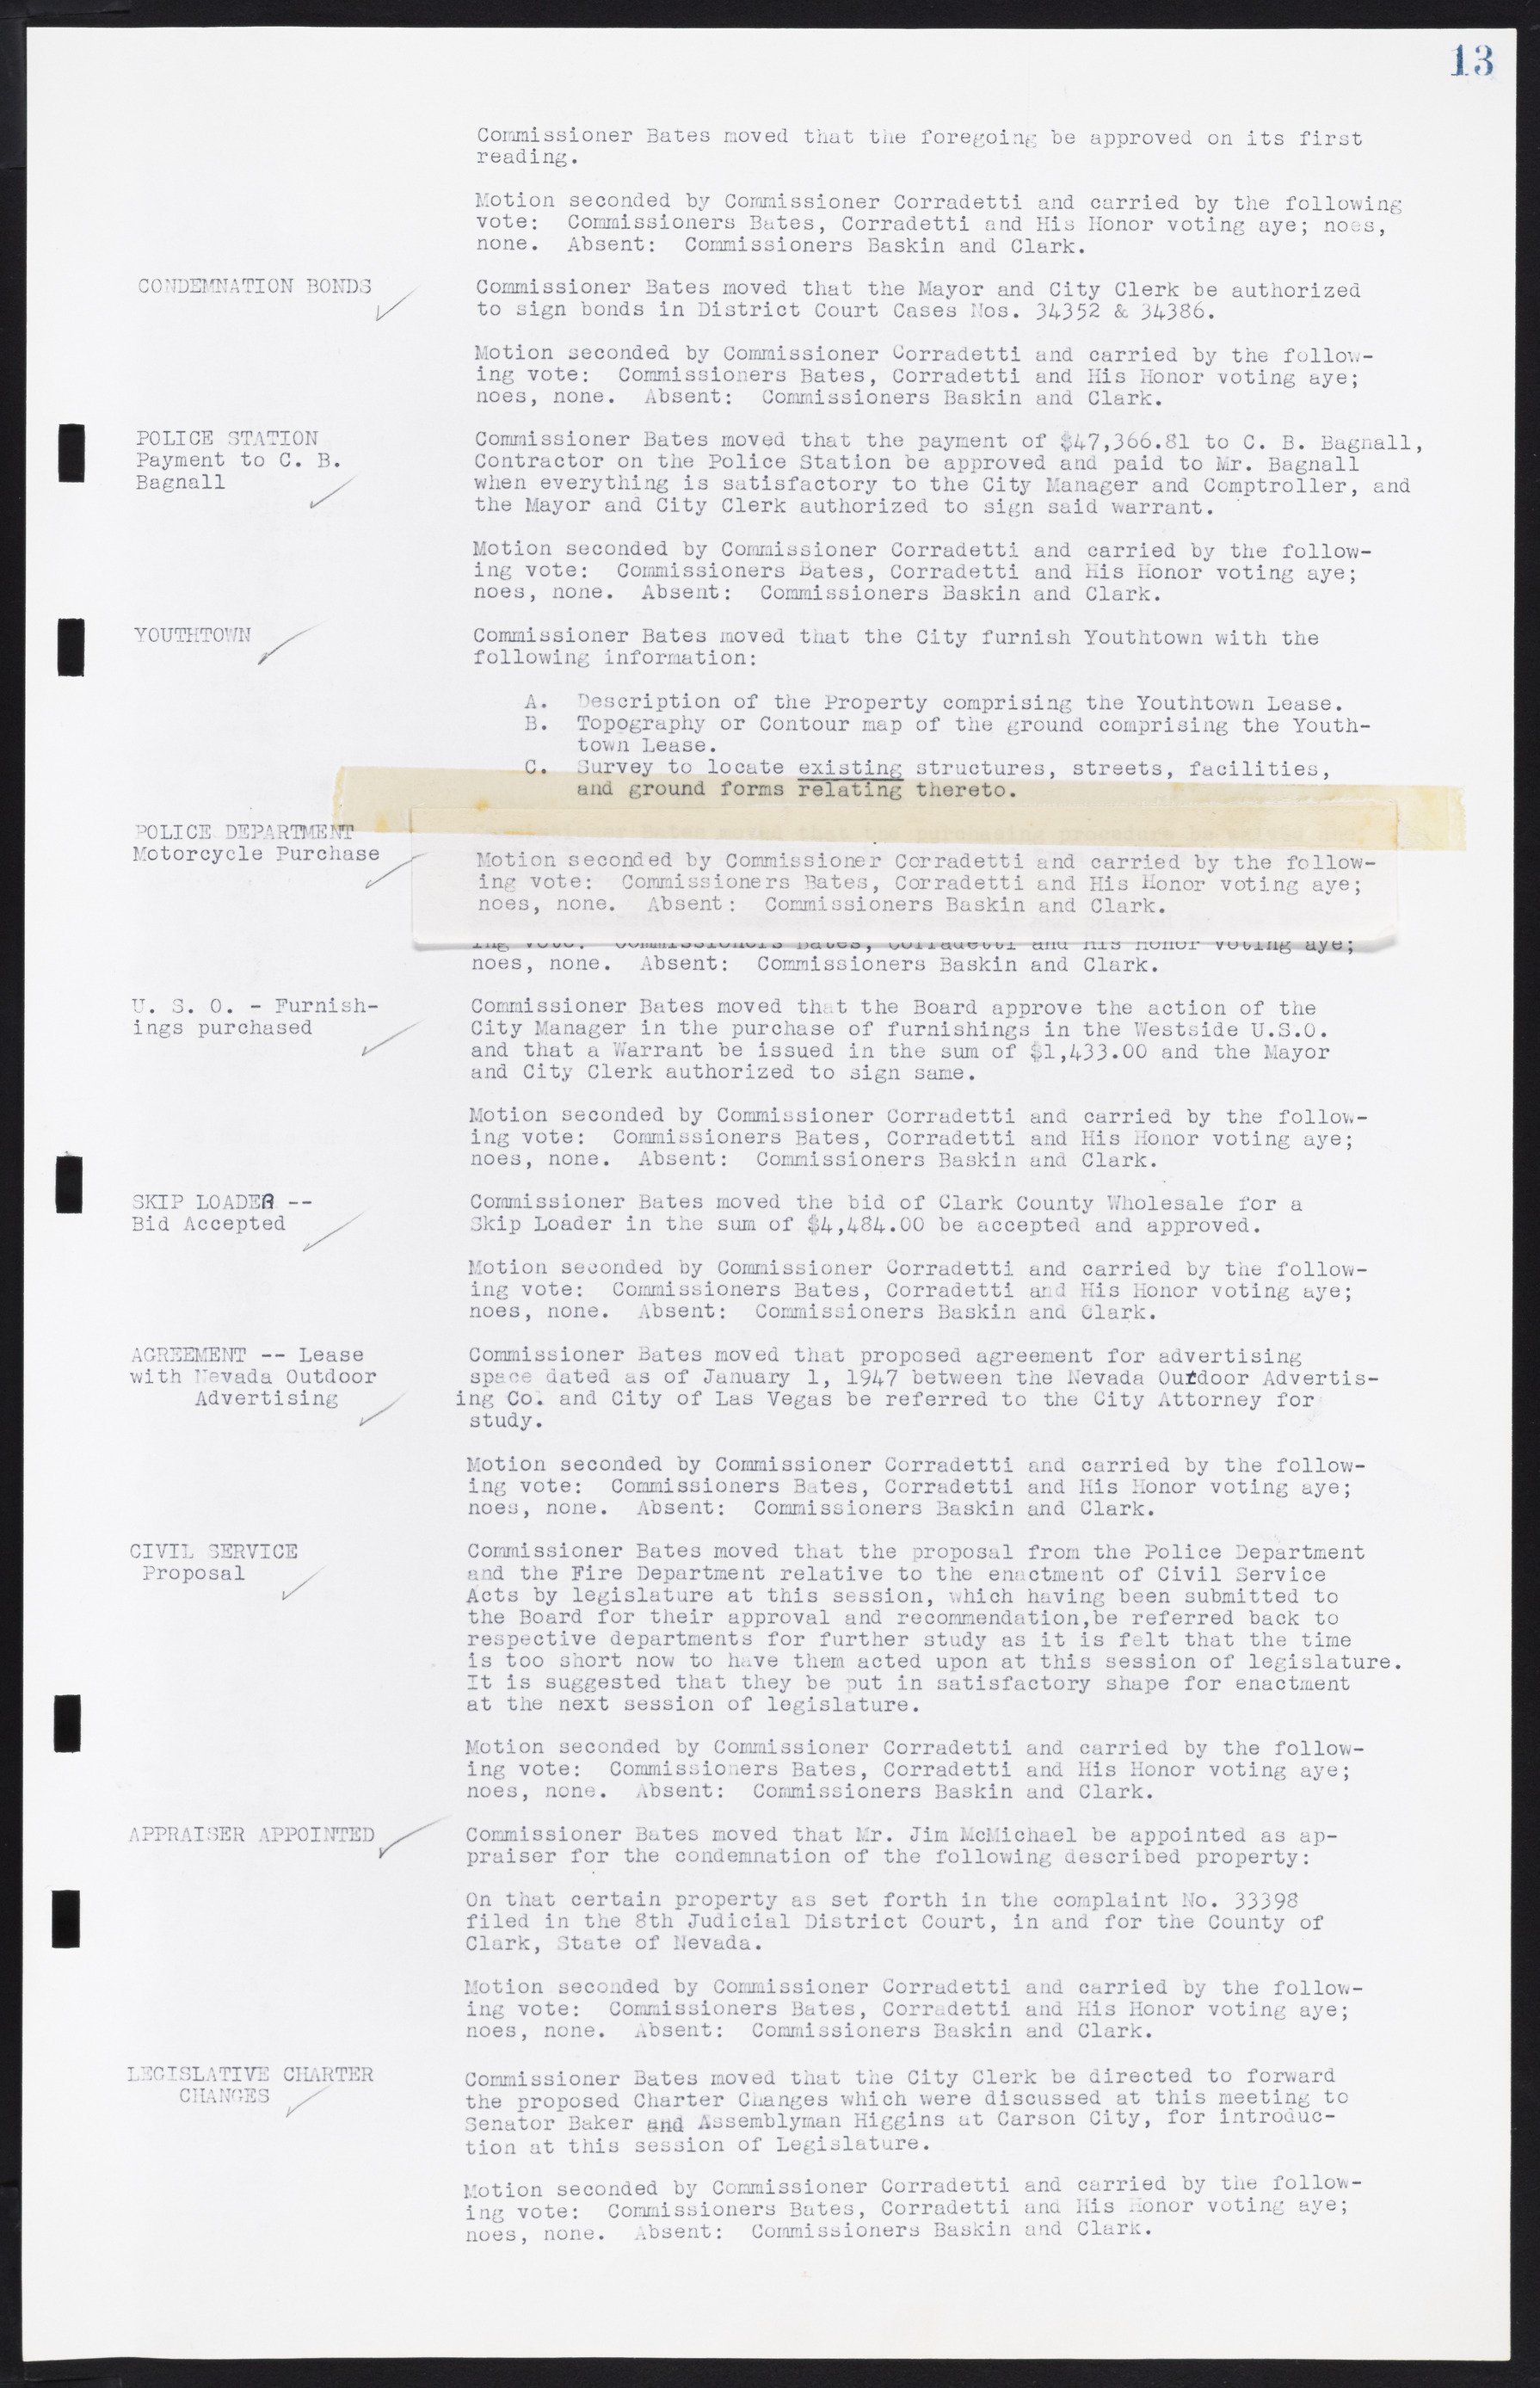 Las Vegas City Commission Minutes, January 7, 1947 to October 26, 1949, lvc000006-21